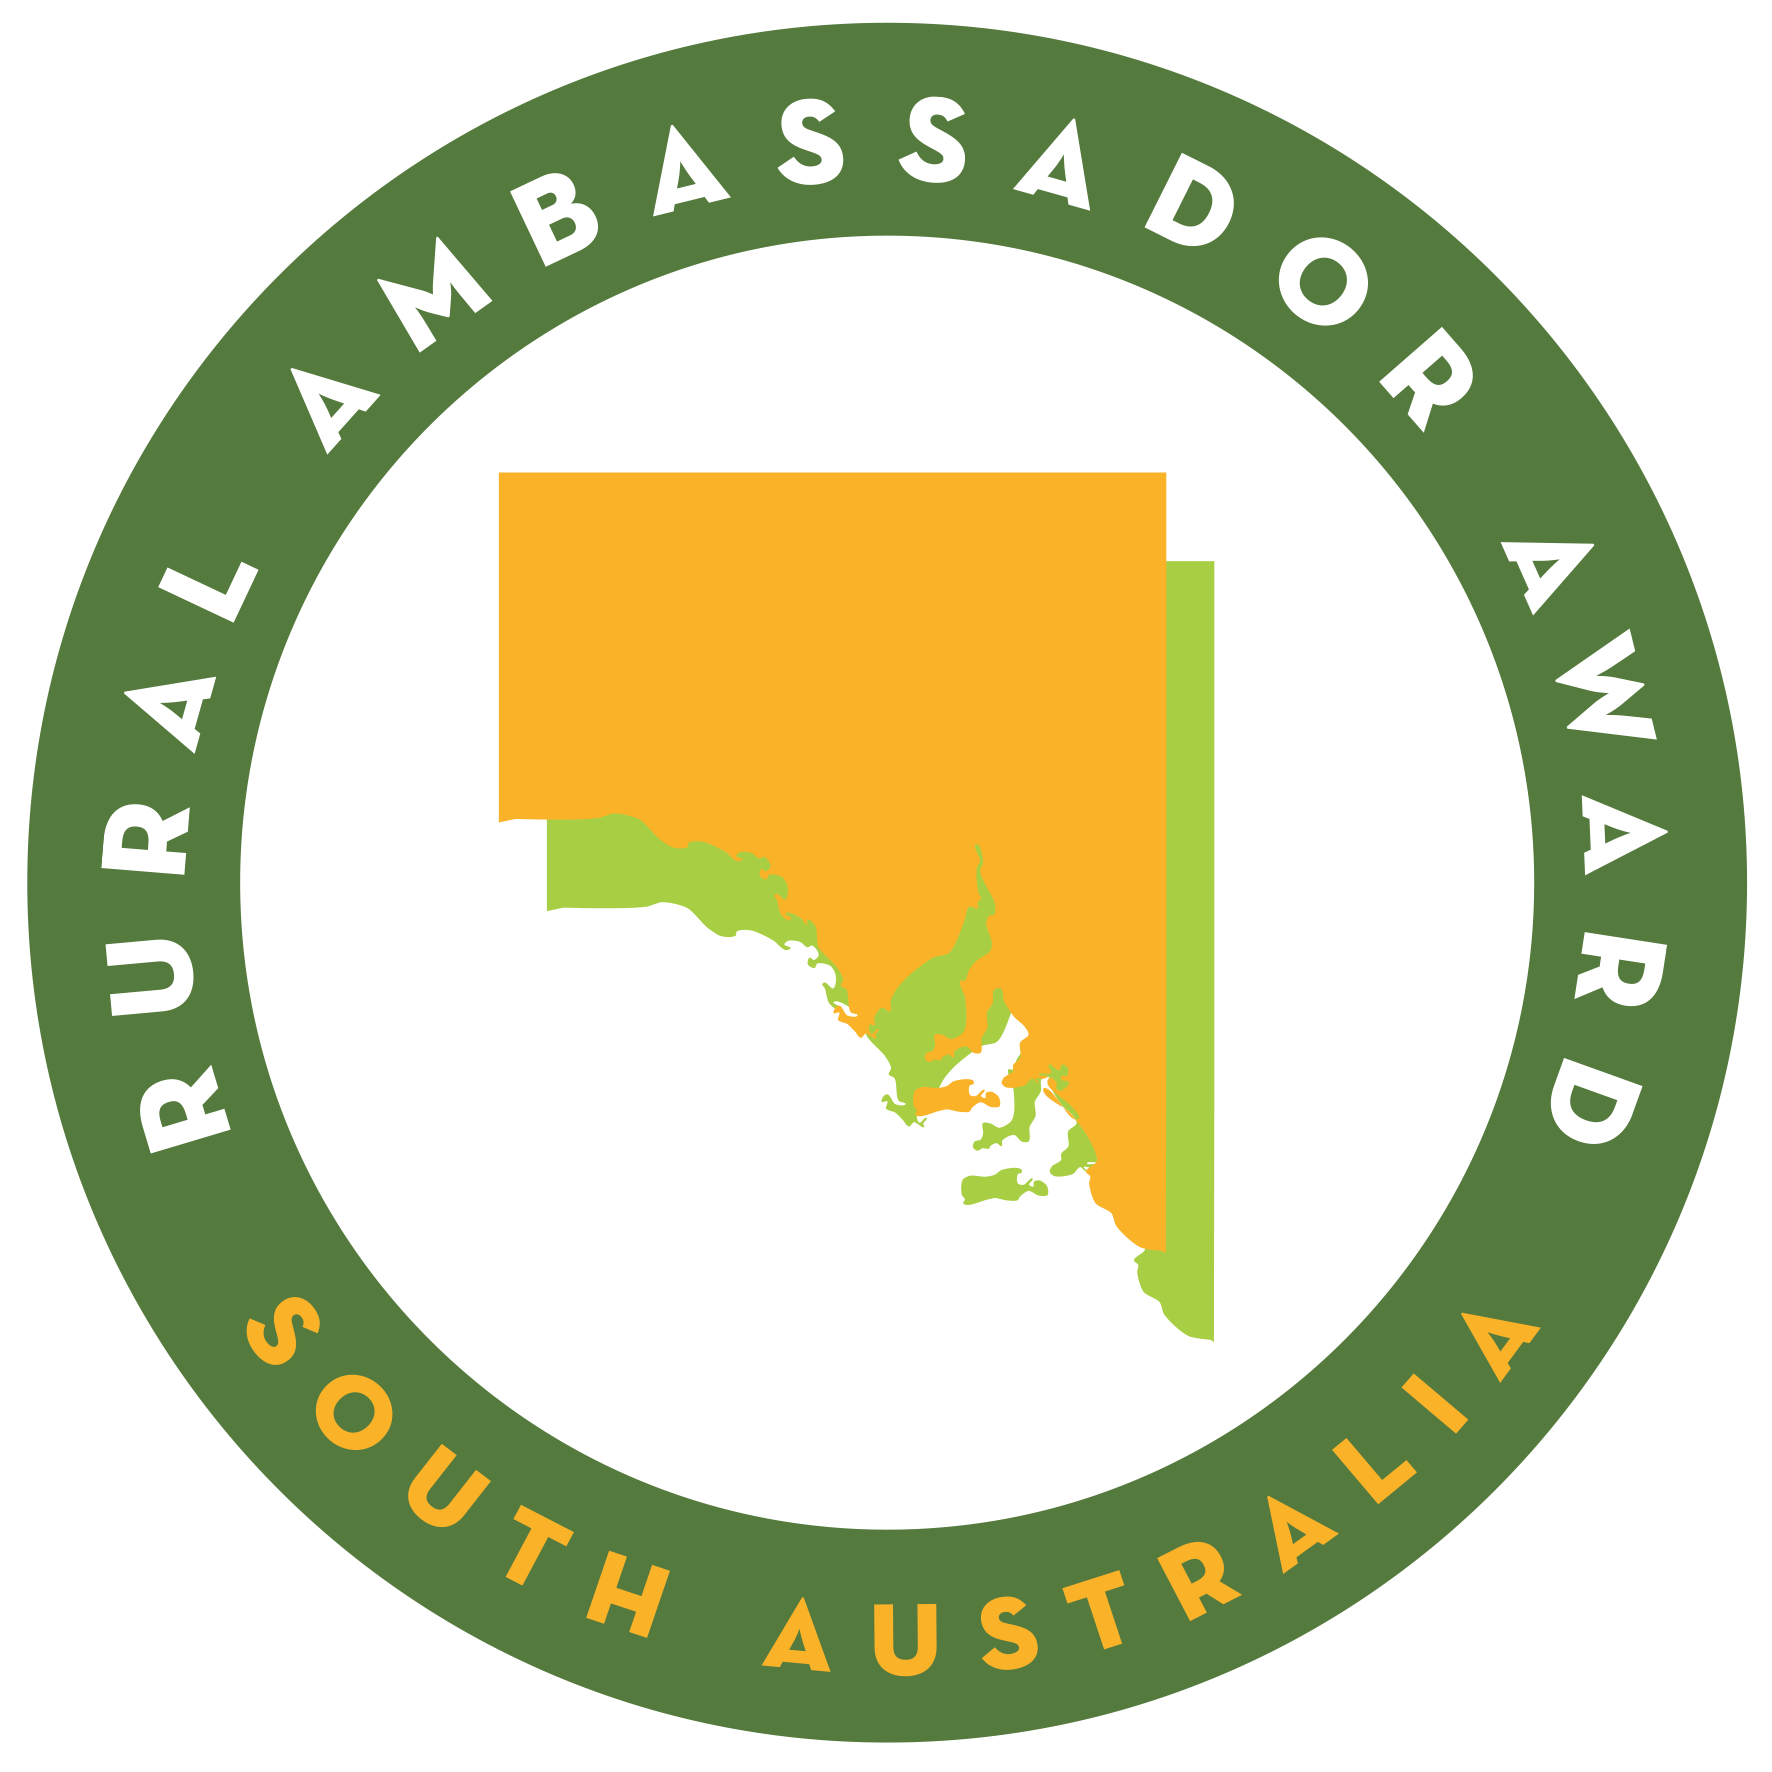 Rural Ambassador Award - South Australian Country Shows